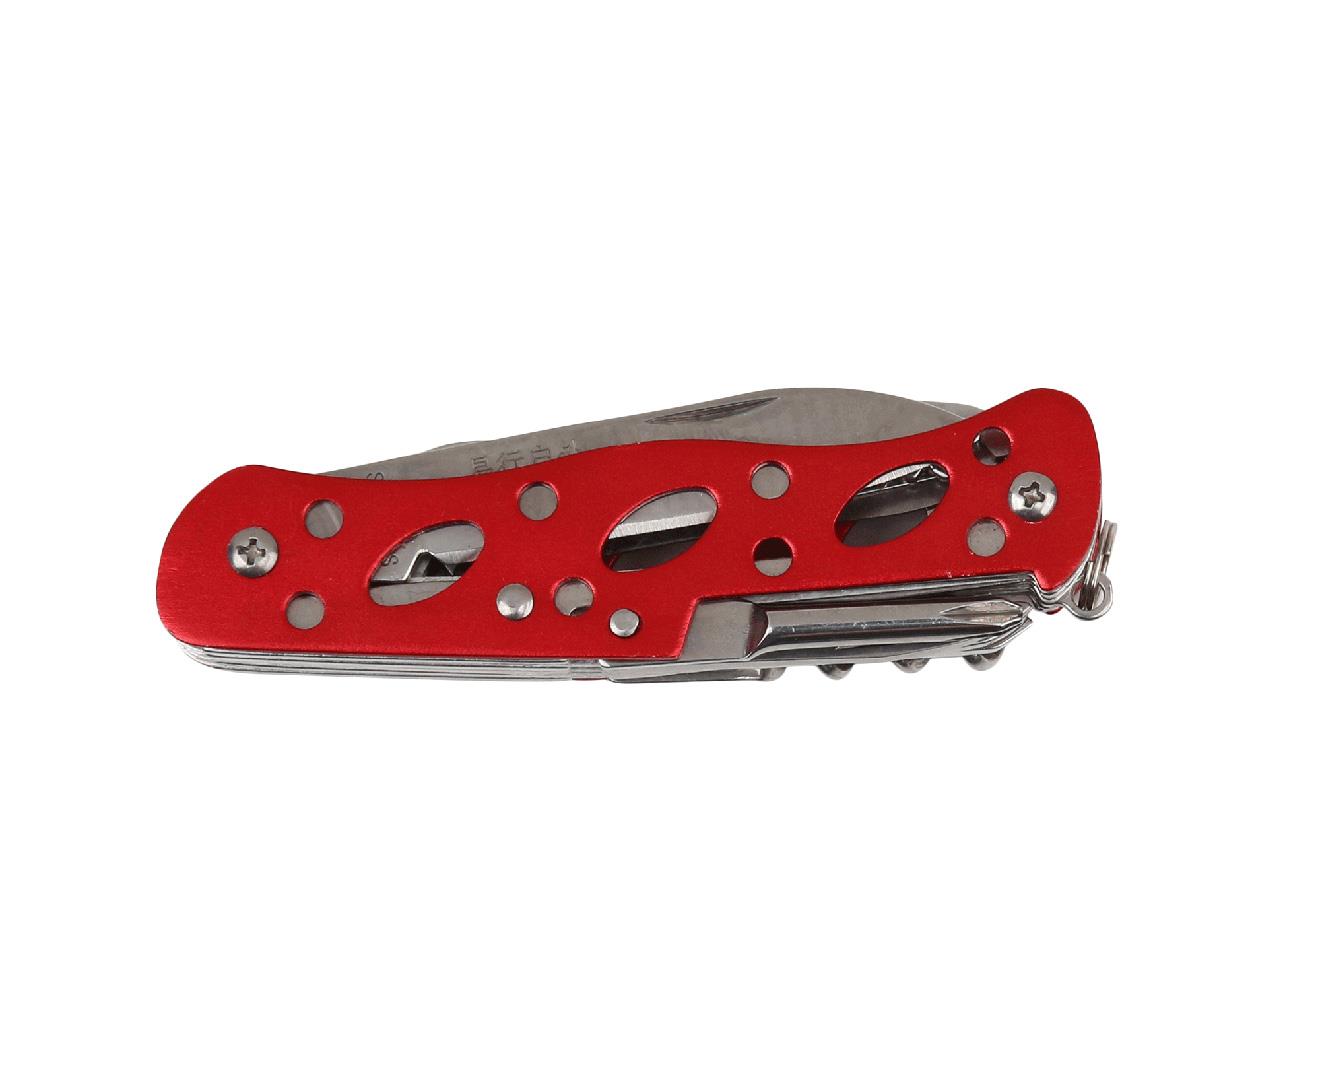 Regatta stainless steel 11 multi-tool pocket work/camping knife  #TRB091